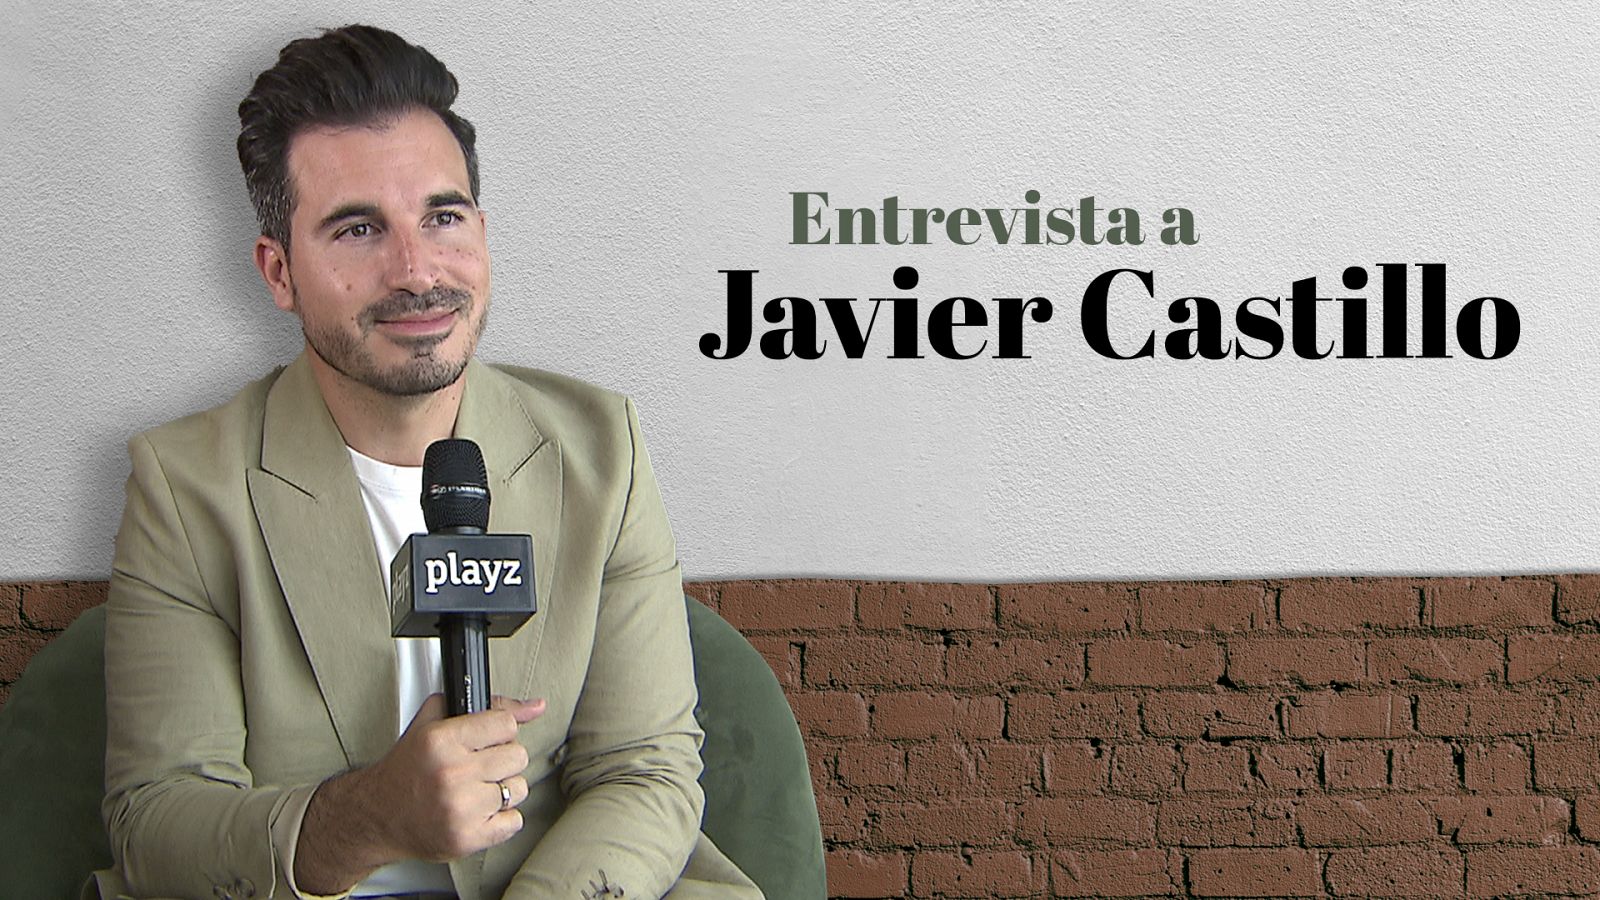 Javier Castillo: "Faltan momentos de parar, asimilar y recordar"